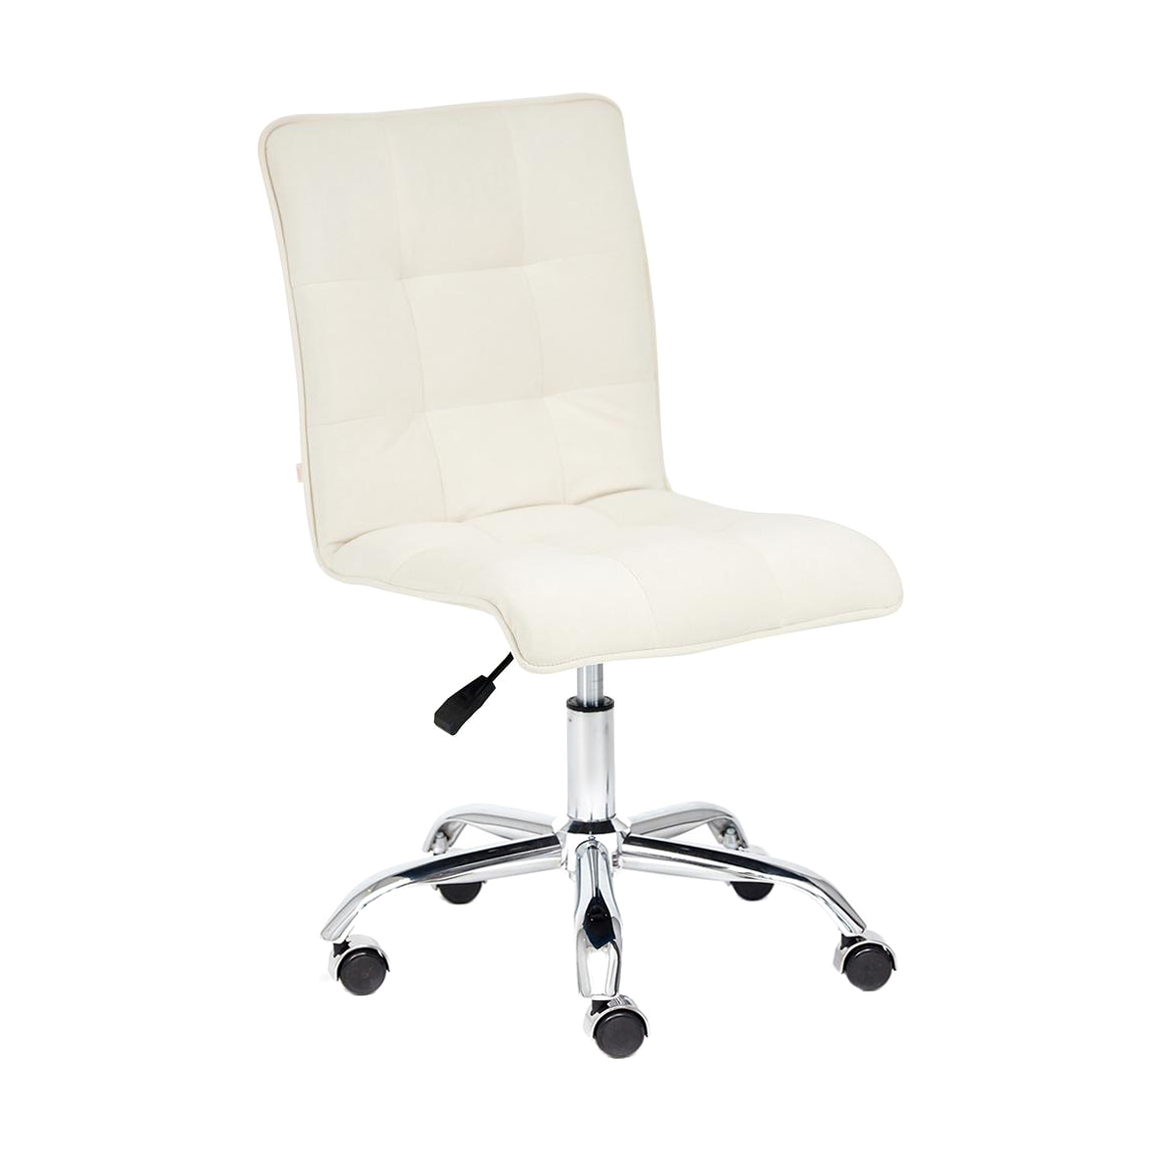 Кресло офисное TC до 100 кг 96х45х40 см молочный кресло офисное tc до 100 кг 96х45х40 см оливковый